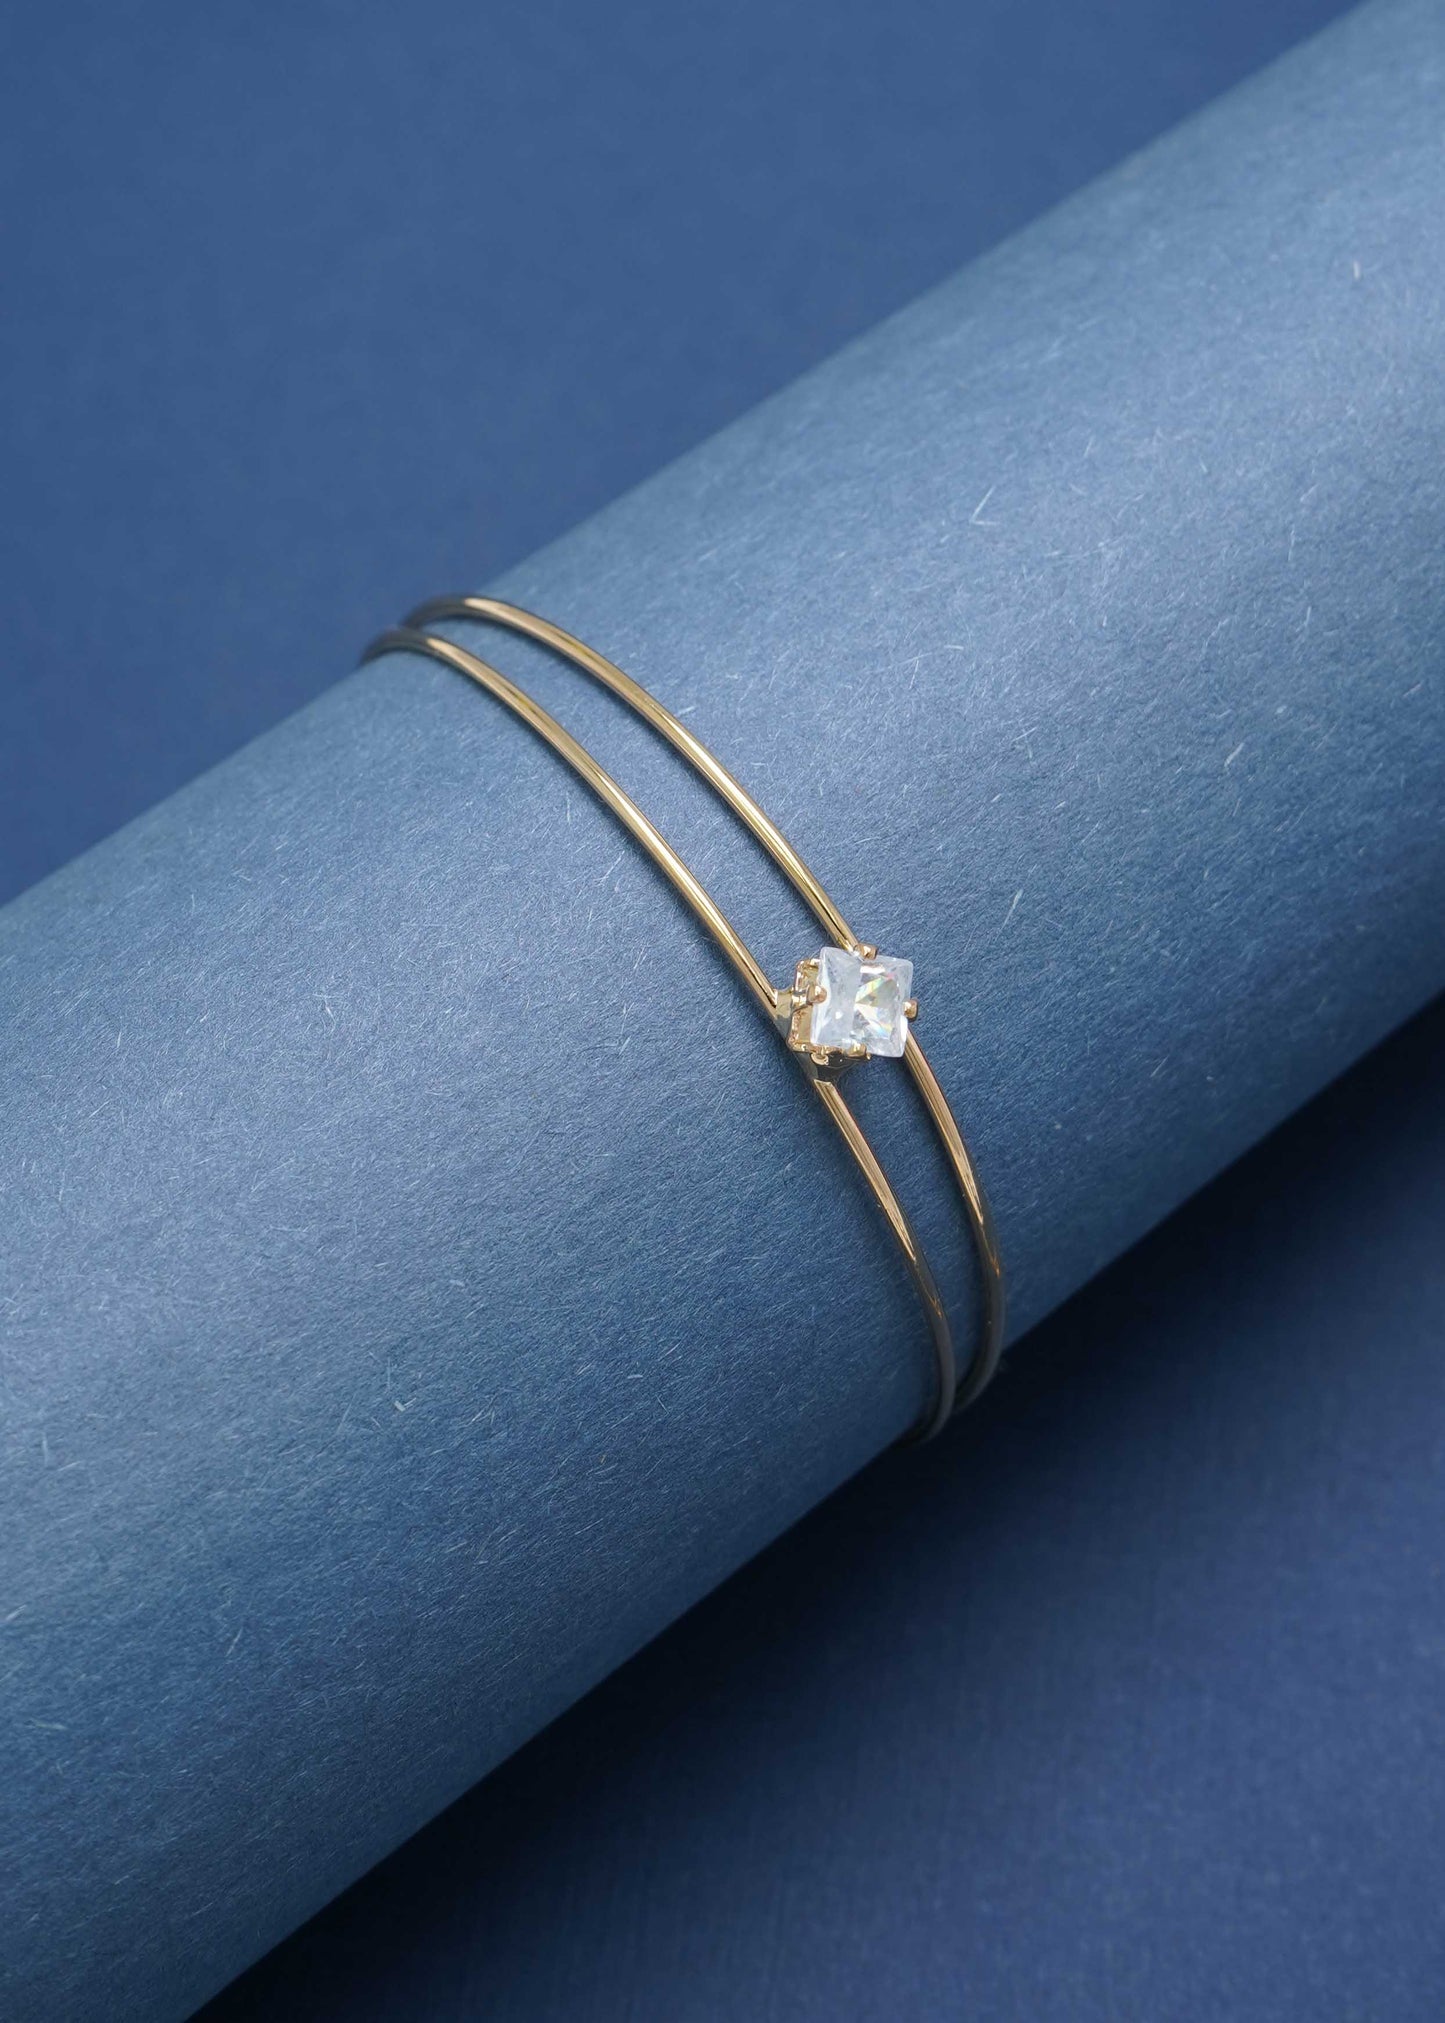 Elegant Ad Diamond Studs Necklace Set For Women and Girls By Ramdev Art Fashion Jewellery